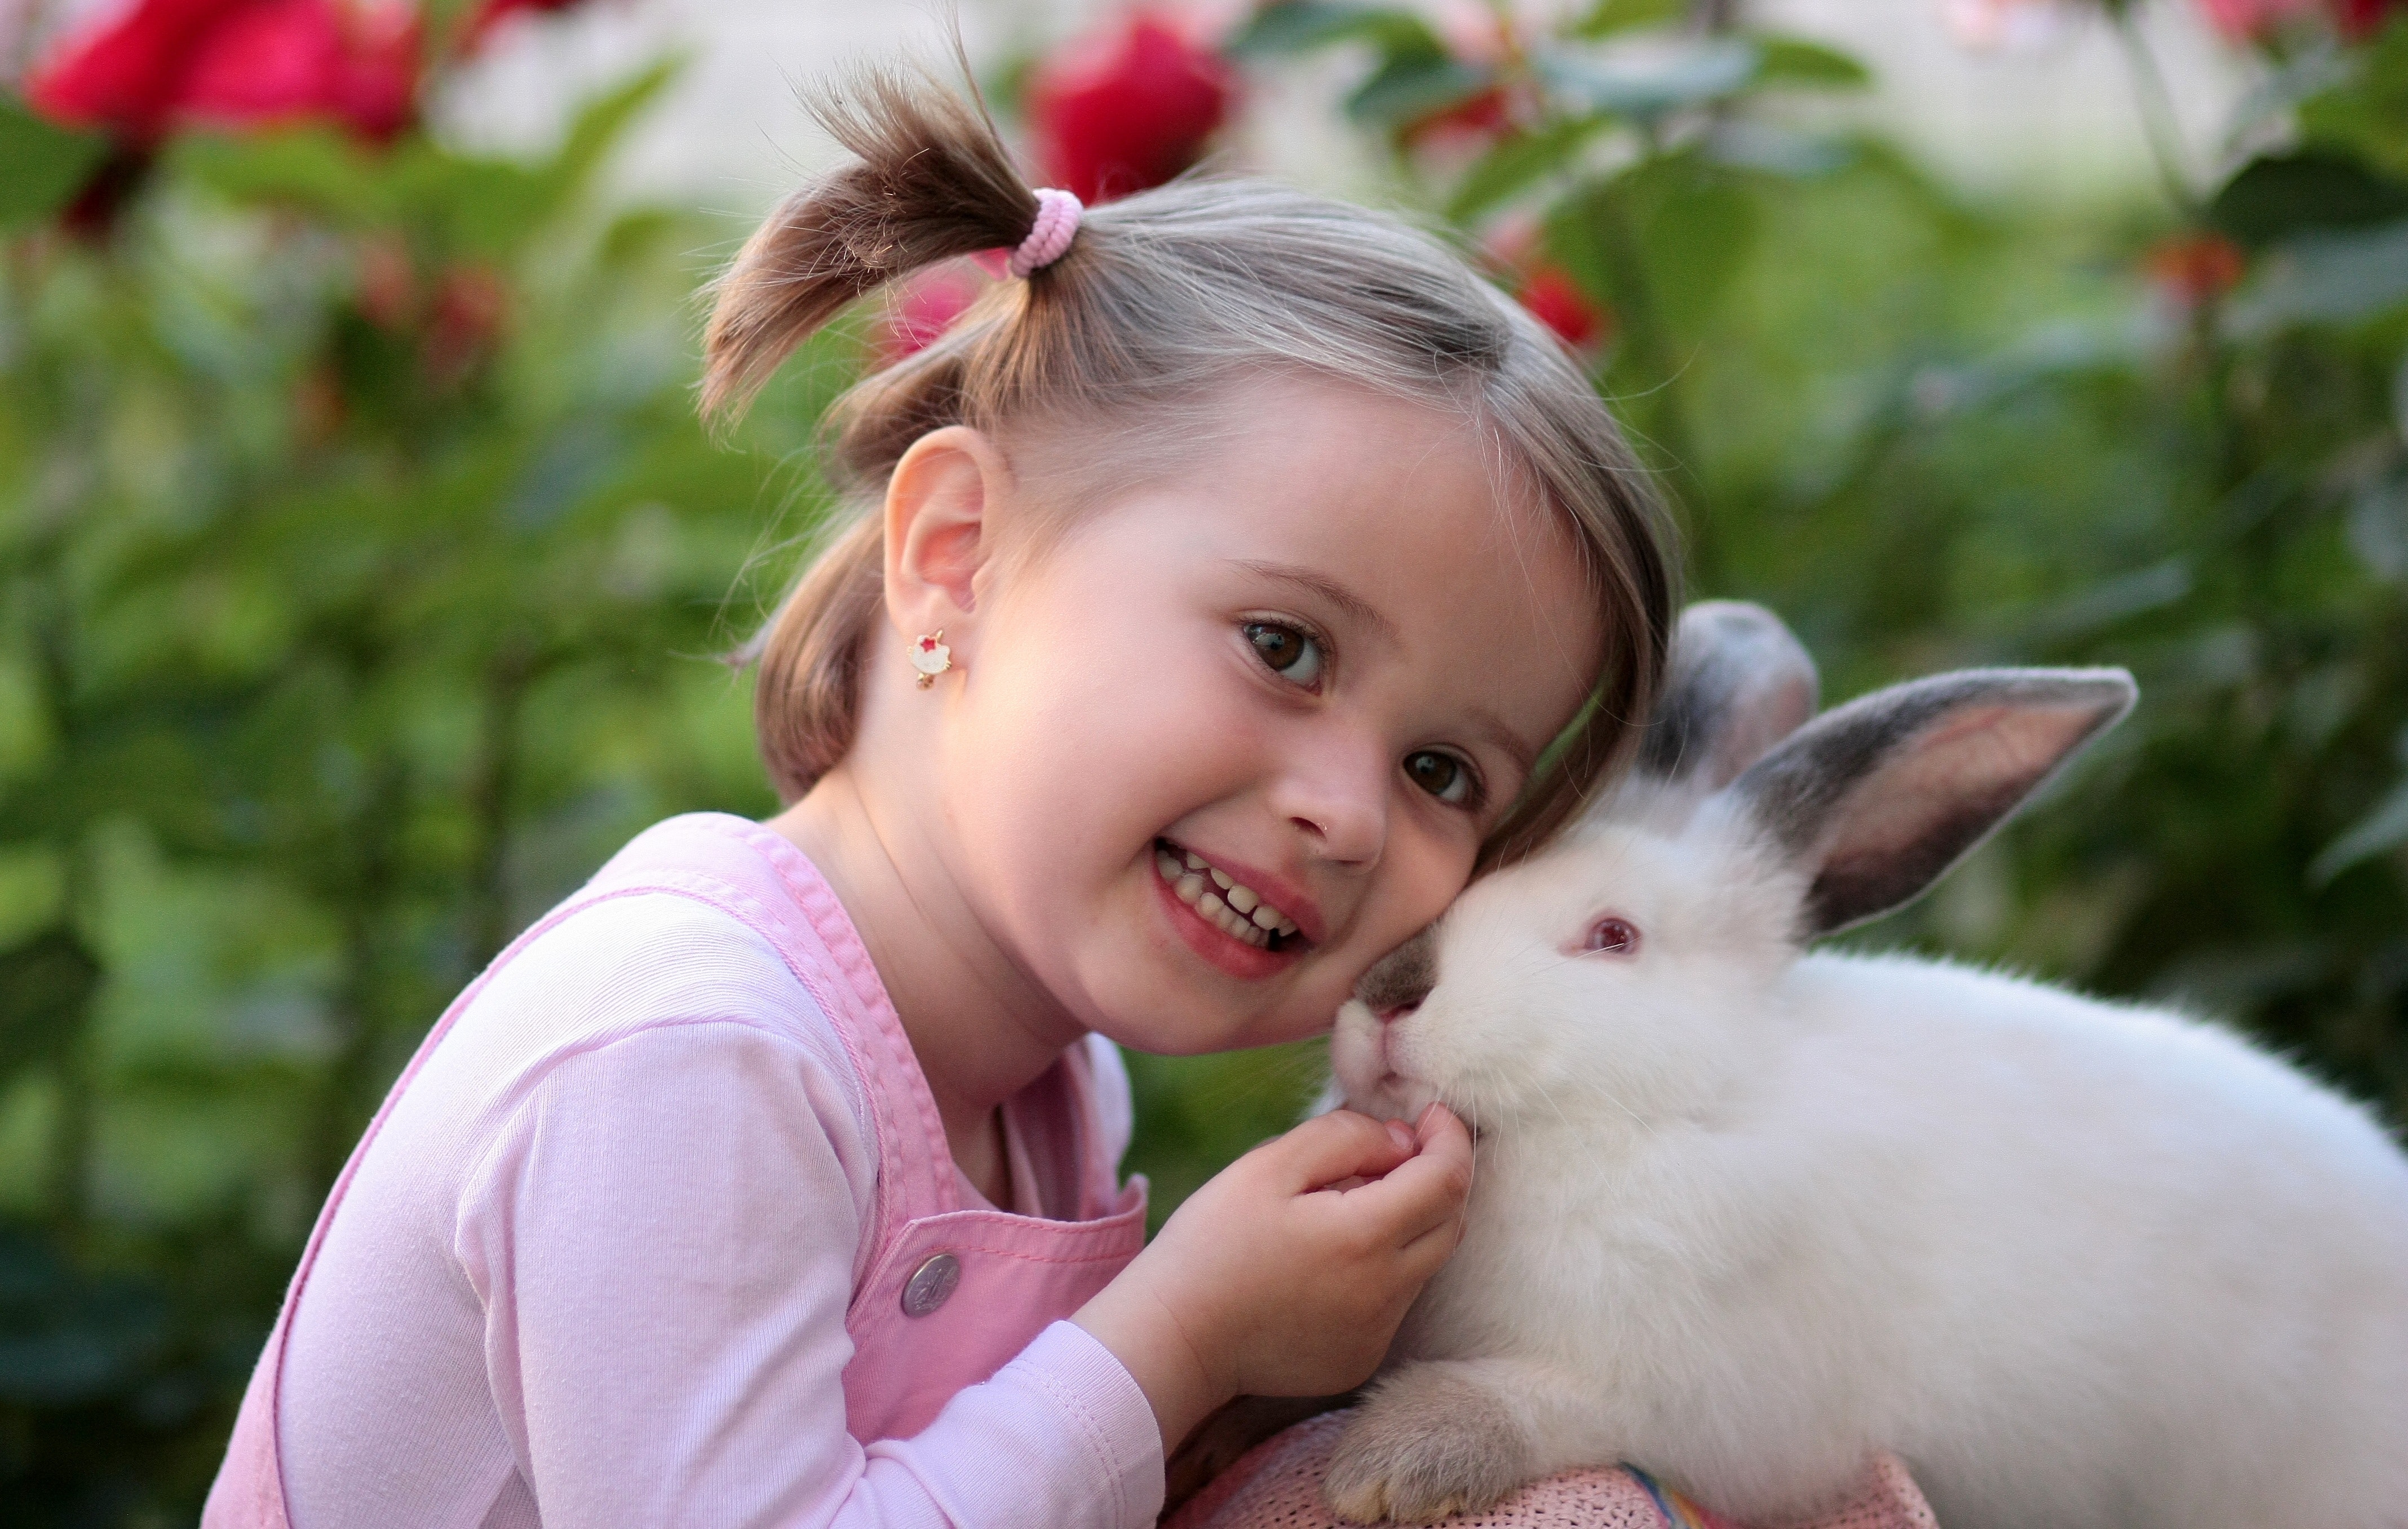 Girl holding white rabbit during daytime photo